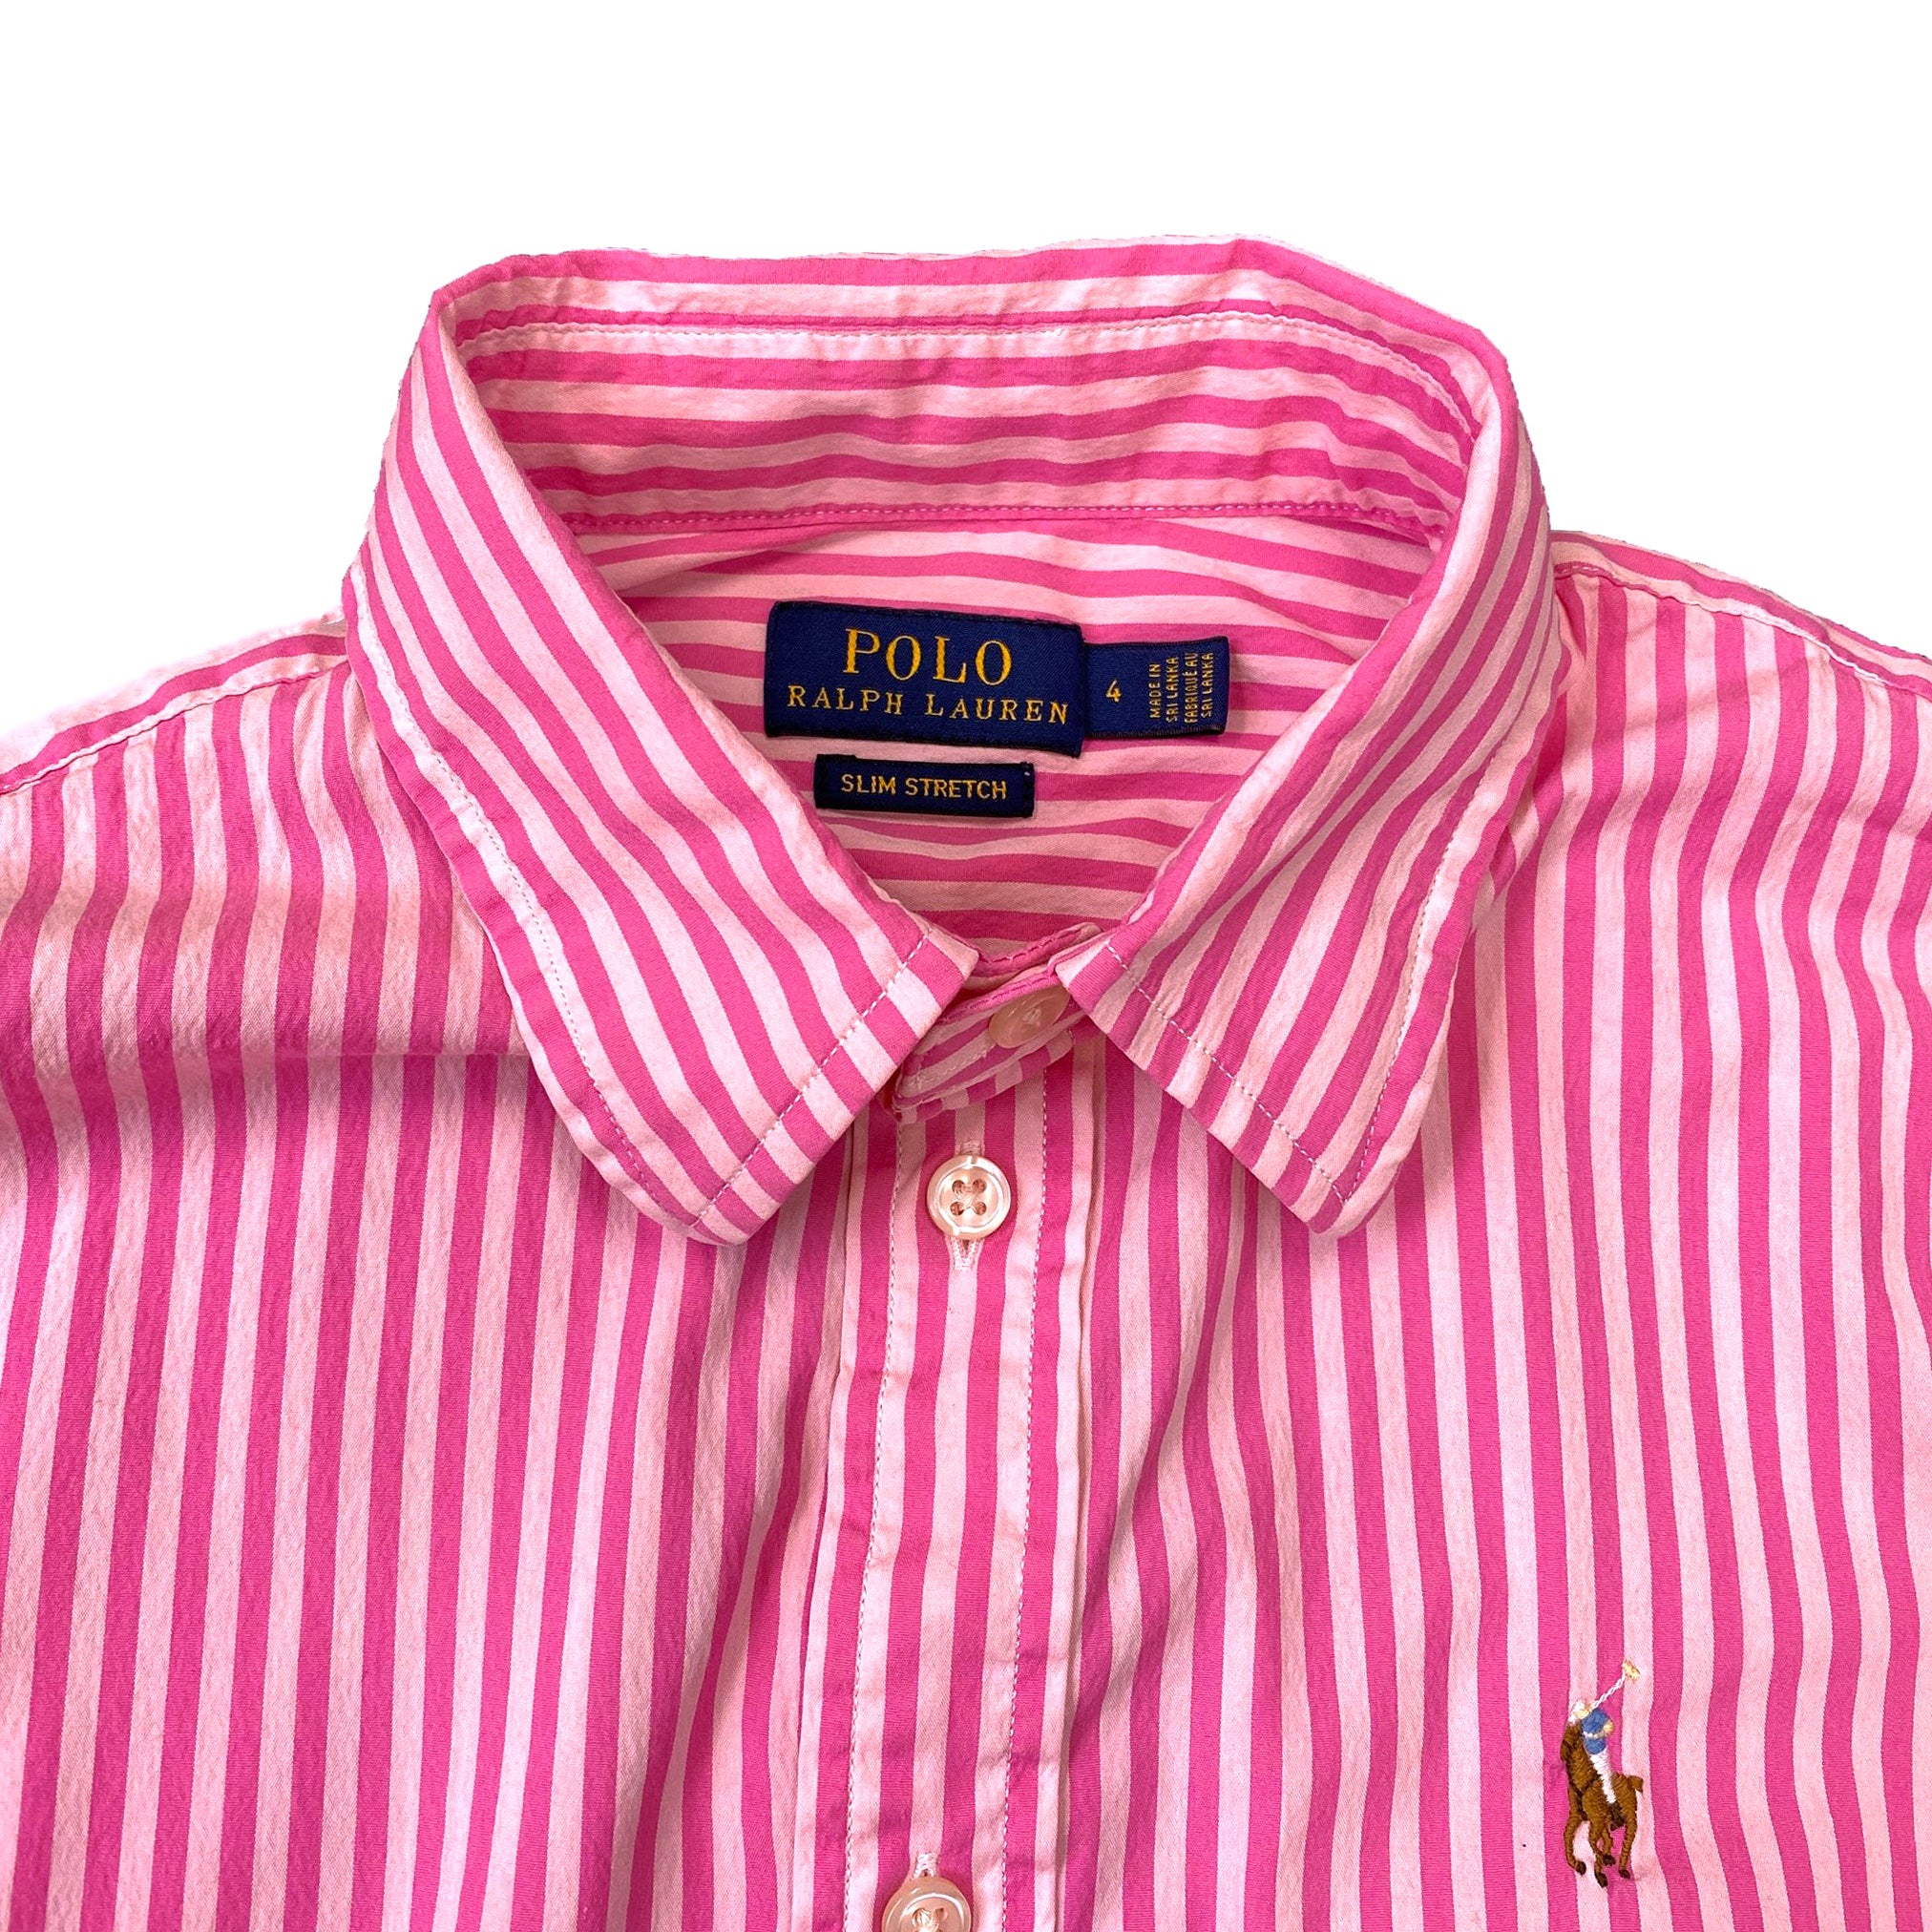 Polo by Ralph Lauren Pink Striped Shirt